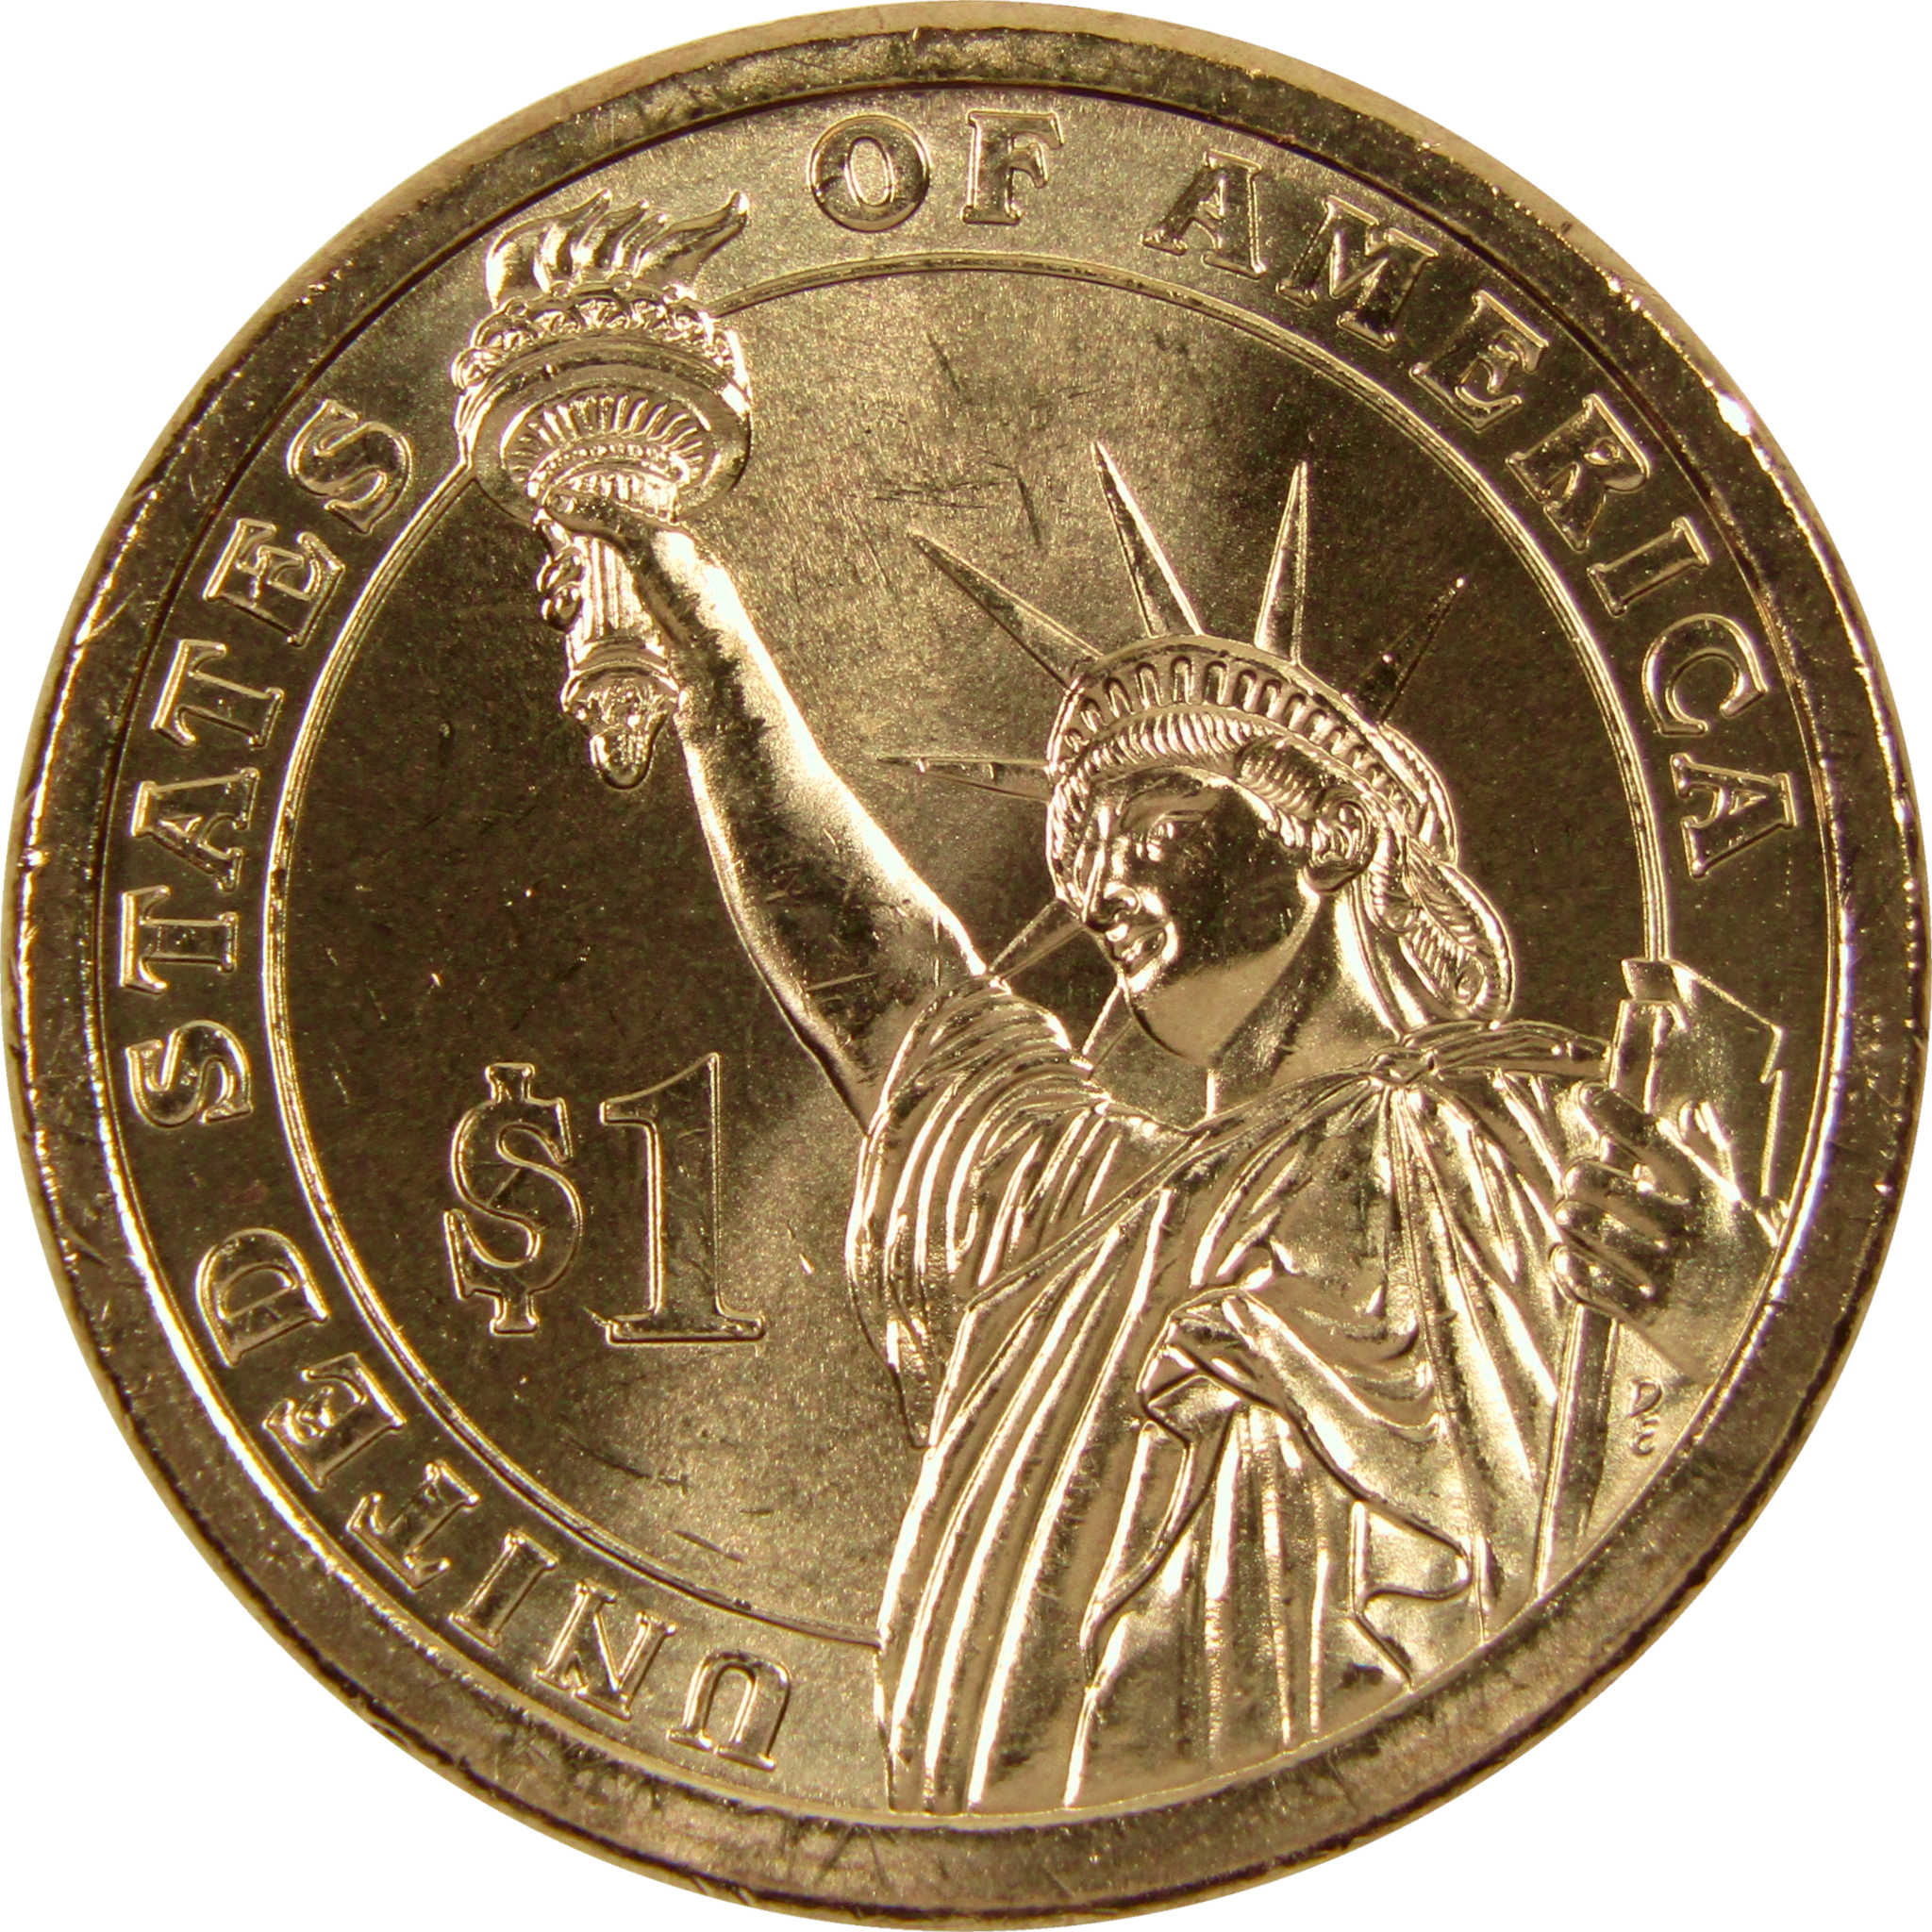 2007 P Thomas Jefferson Presidential Dollar BU Uncirculated $1 Coin